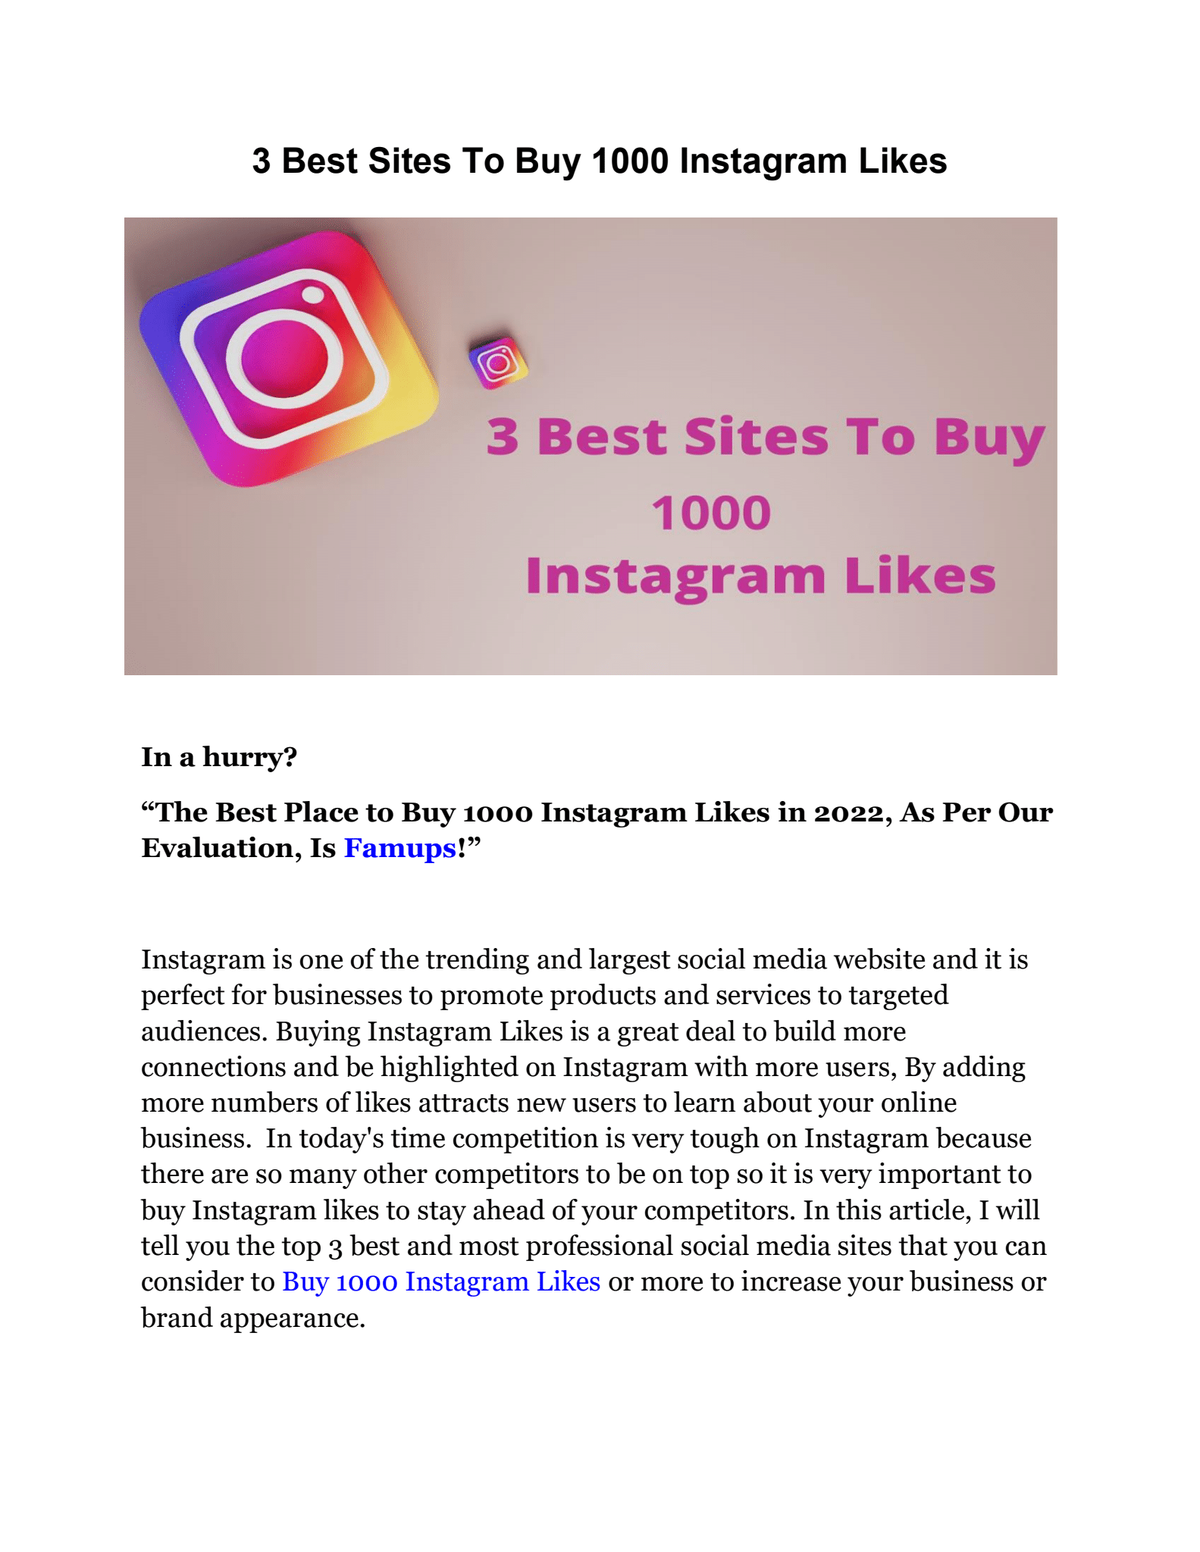 Dropbox - 3 Best Sites To Buy Instagram Followers.pdf - Simplify your life